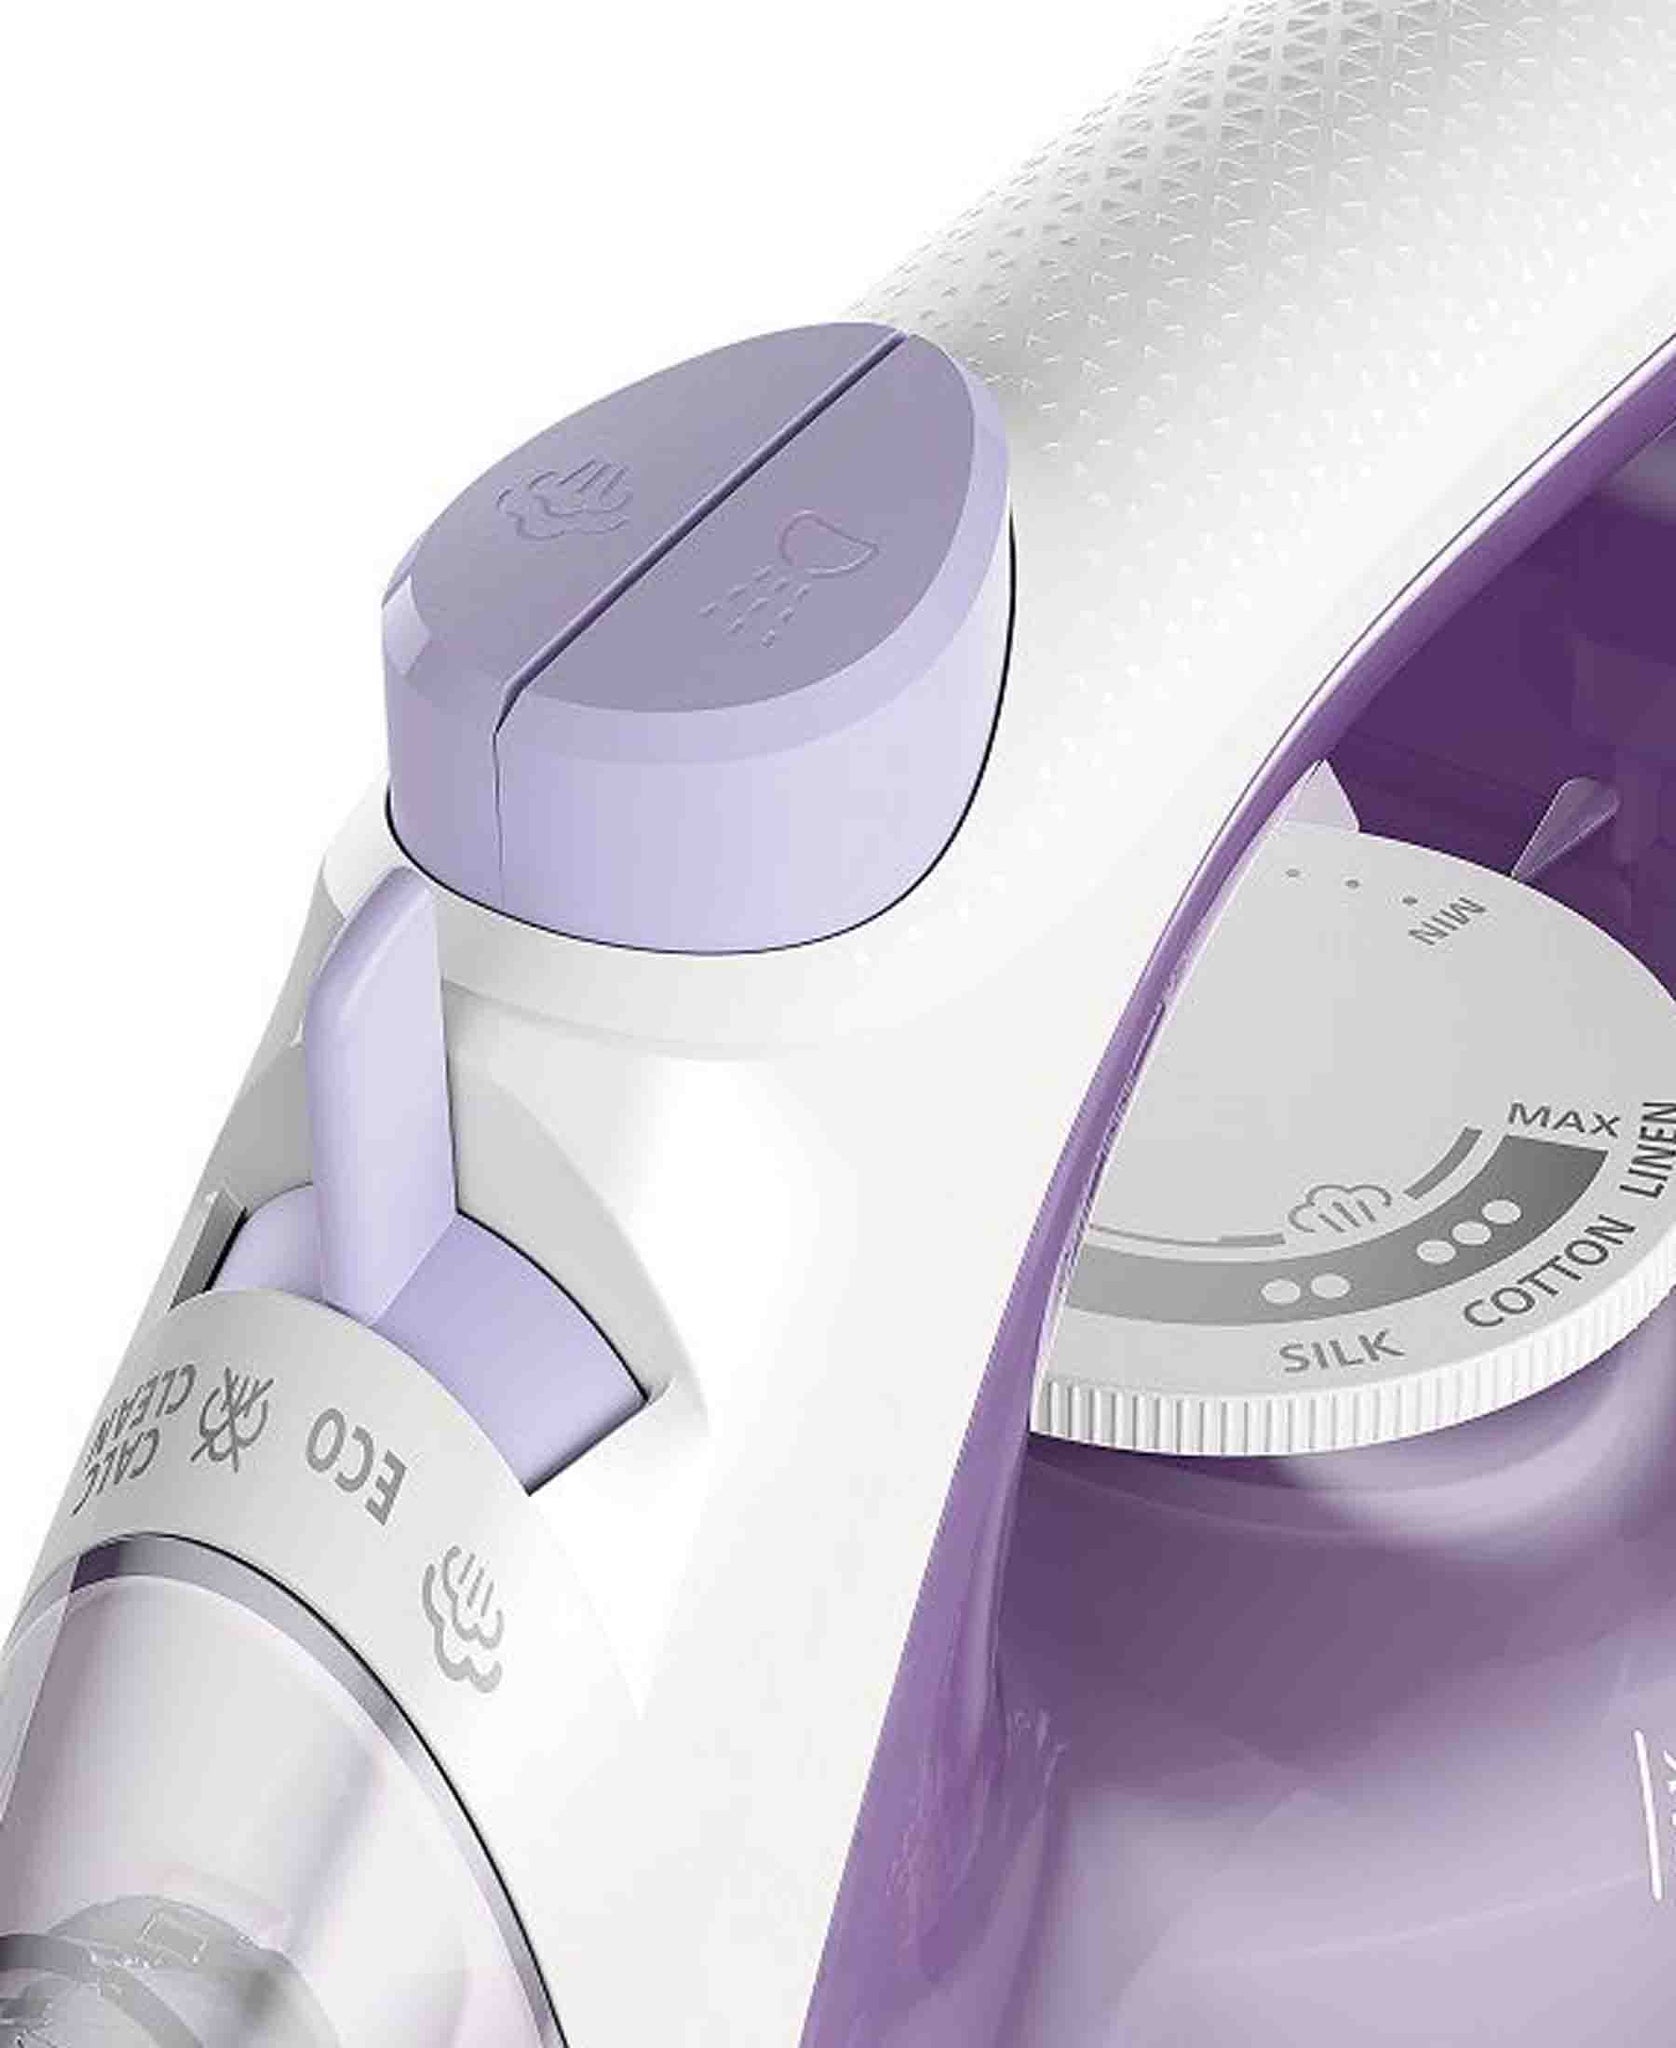 Philips 1000 Series Steam lron - Purple & White